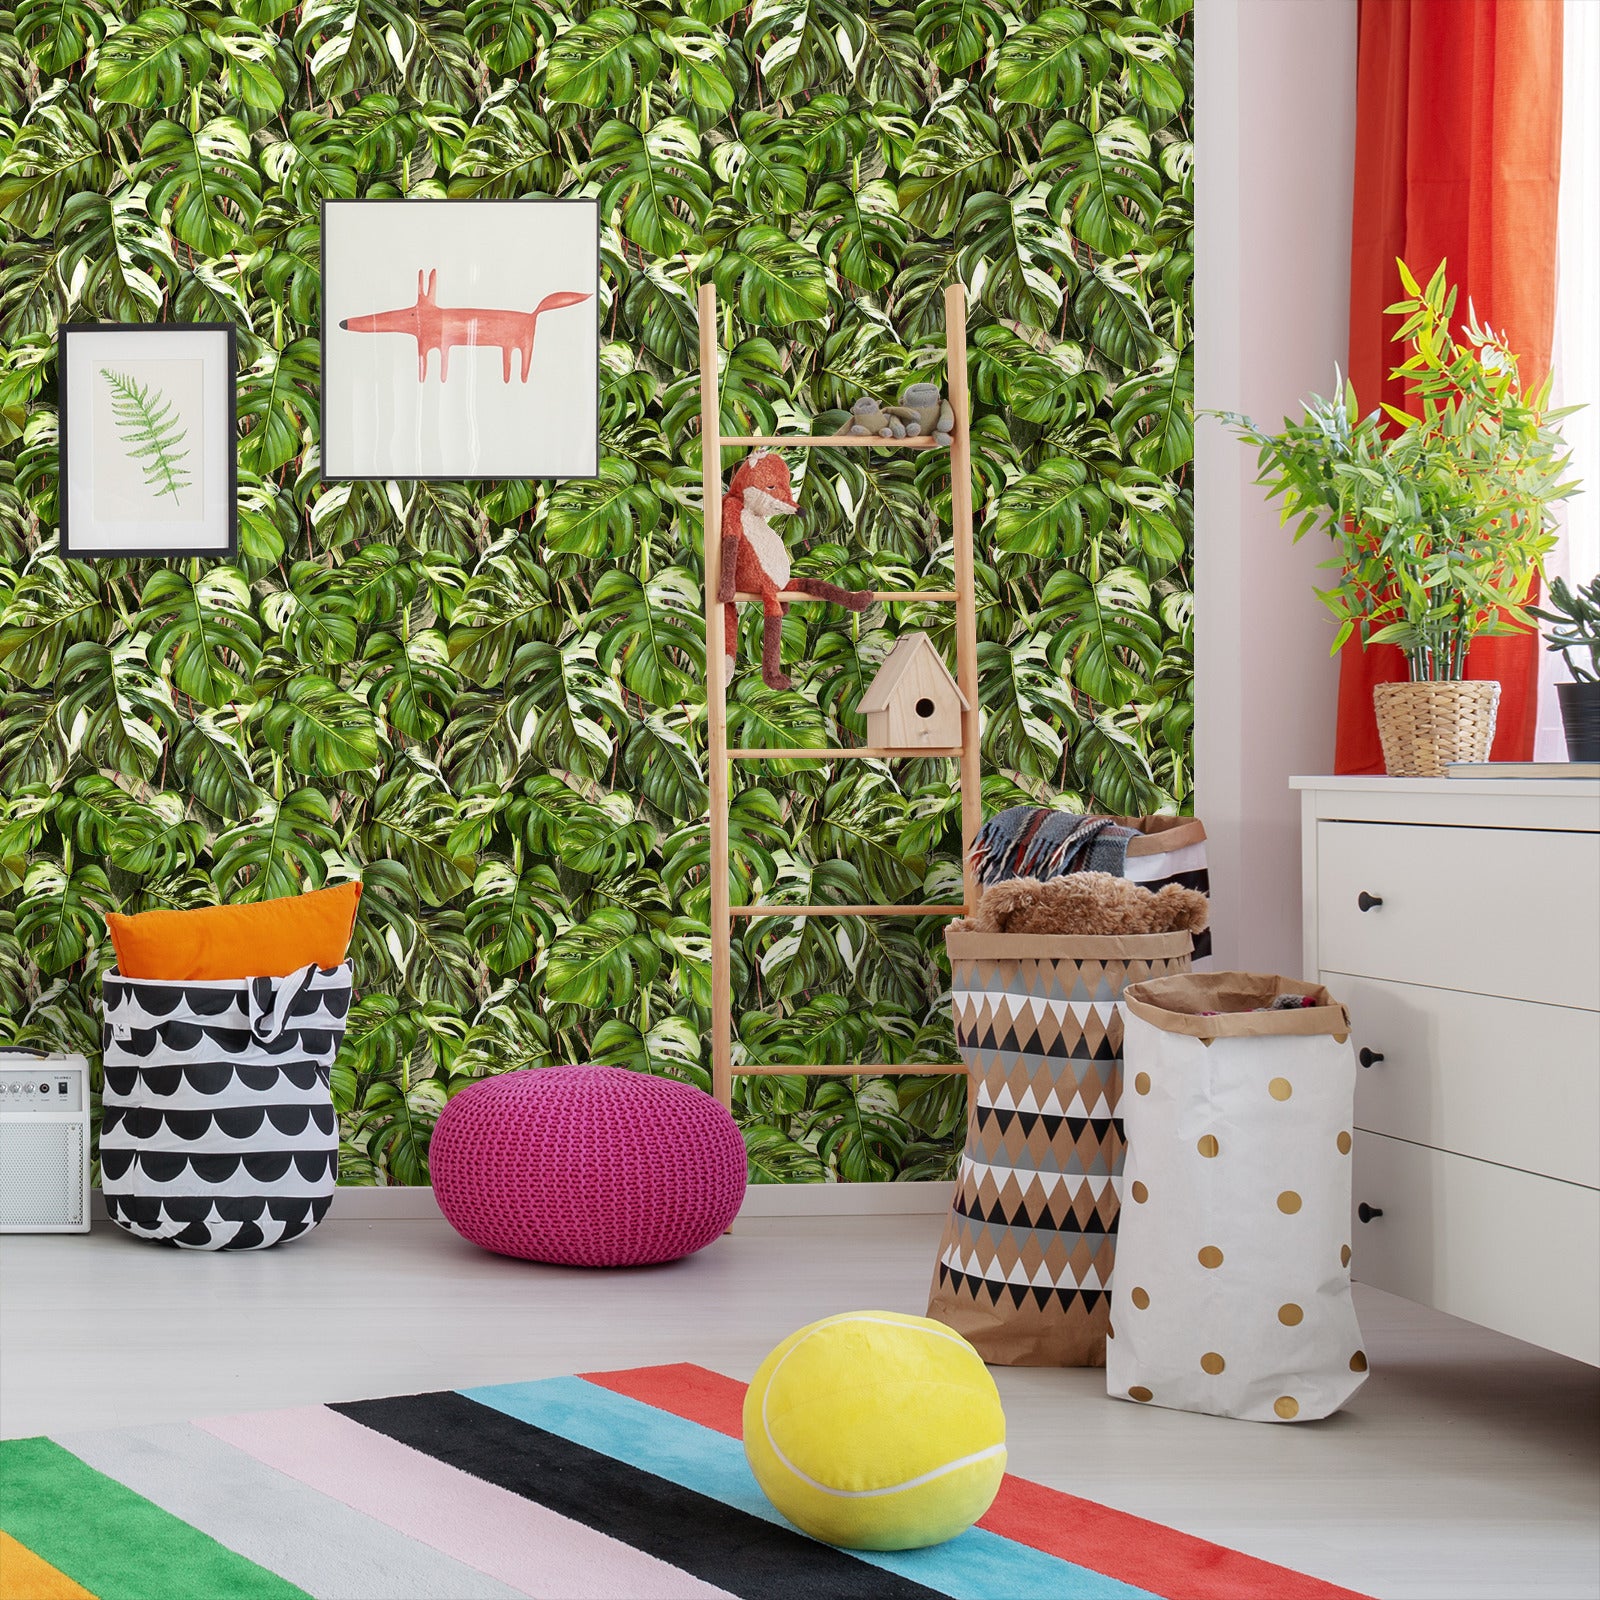 18' L x 24" W Peel & Stick Wallpaper Roll - Dark Monstera Palm Leaf by DecoWorks - Wallpaper - Americanflat